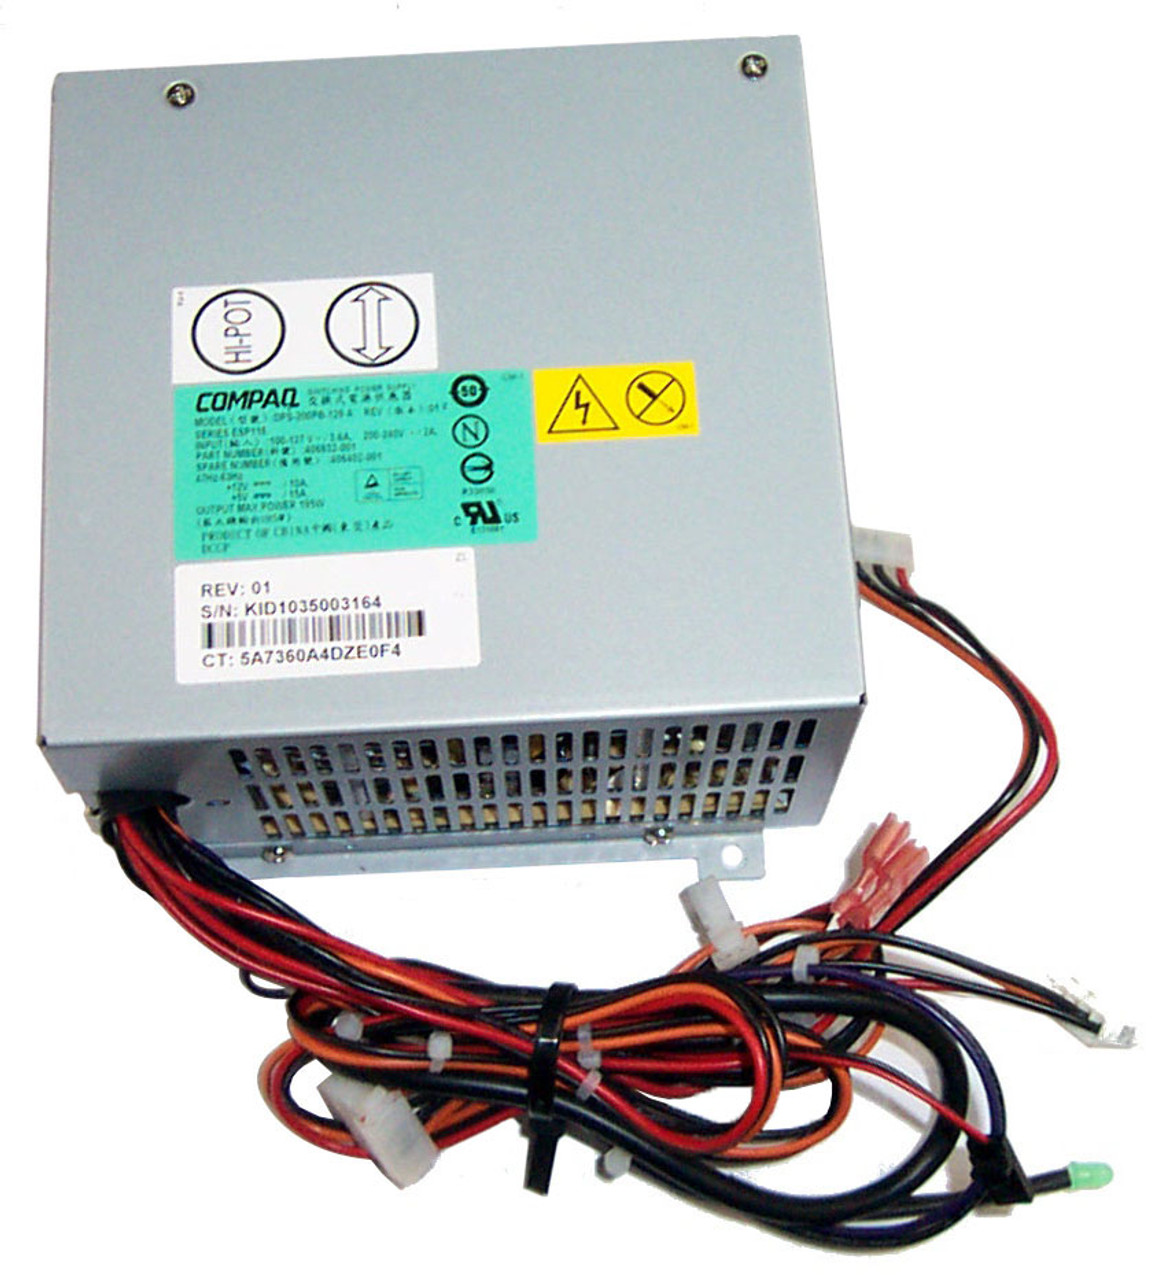 DPS-200PB-55B Compaq 200-Watts ATX AC Power Supply with PFC